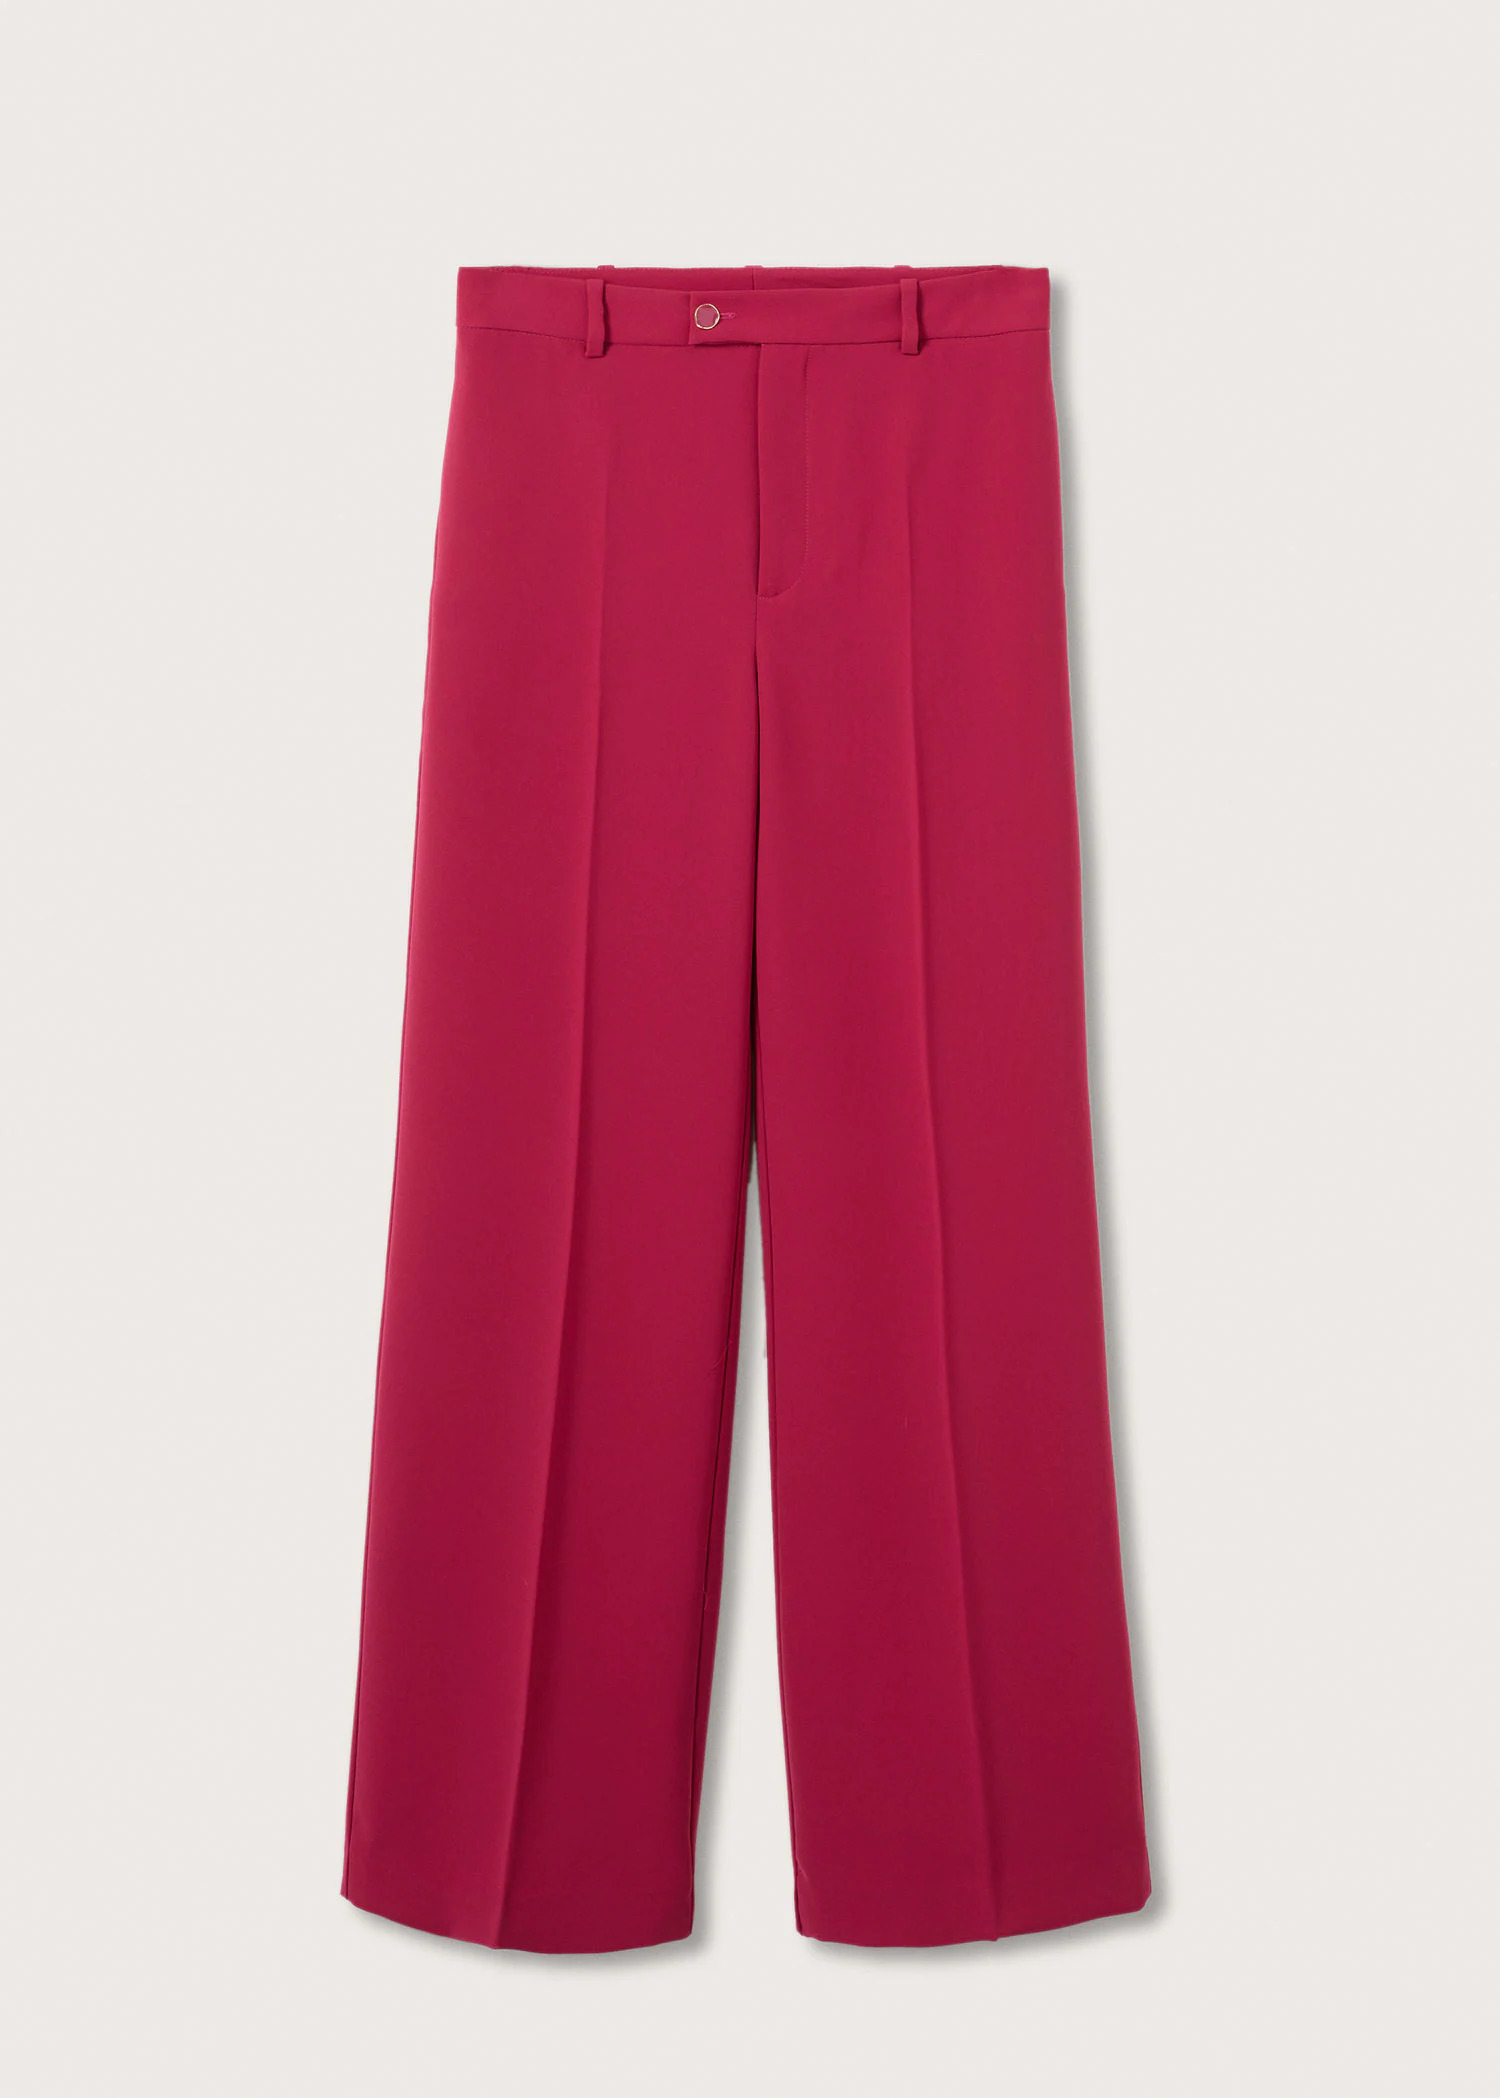 Pantalón color frambuesa, de Mango.